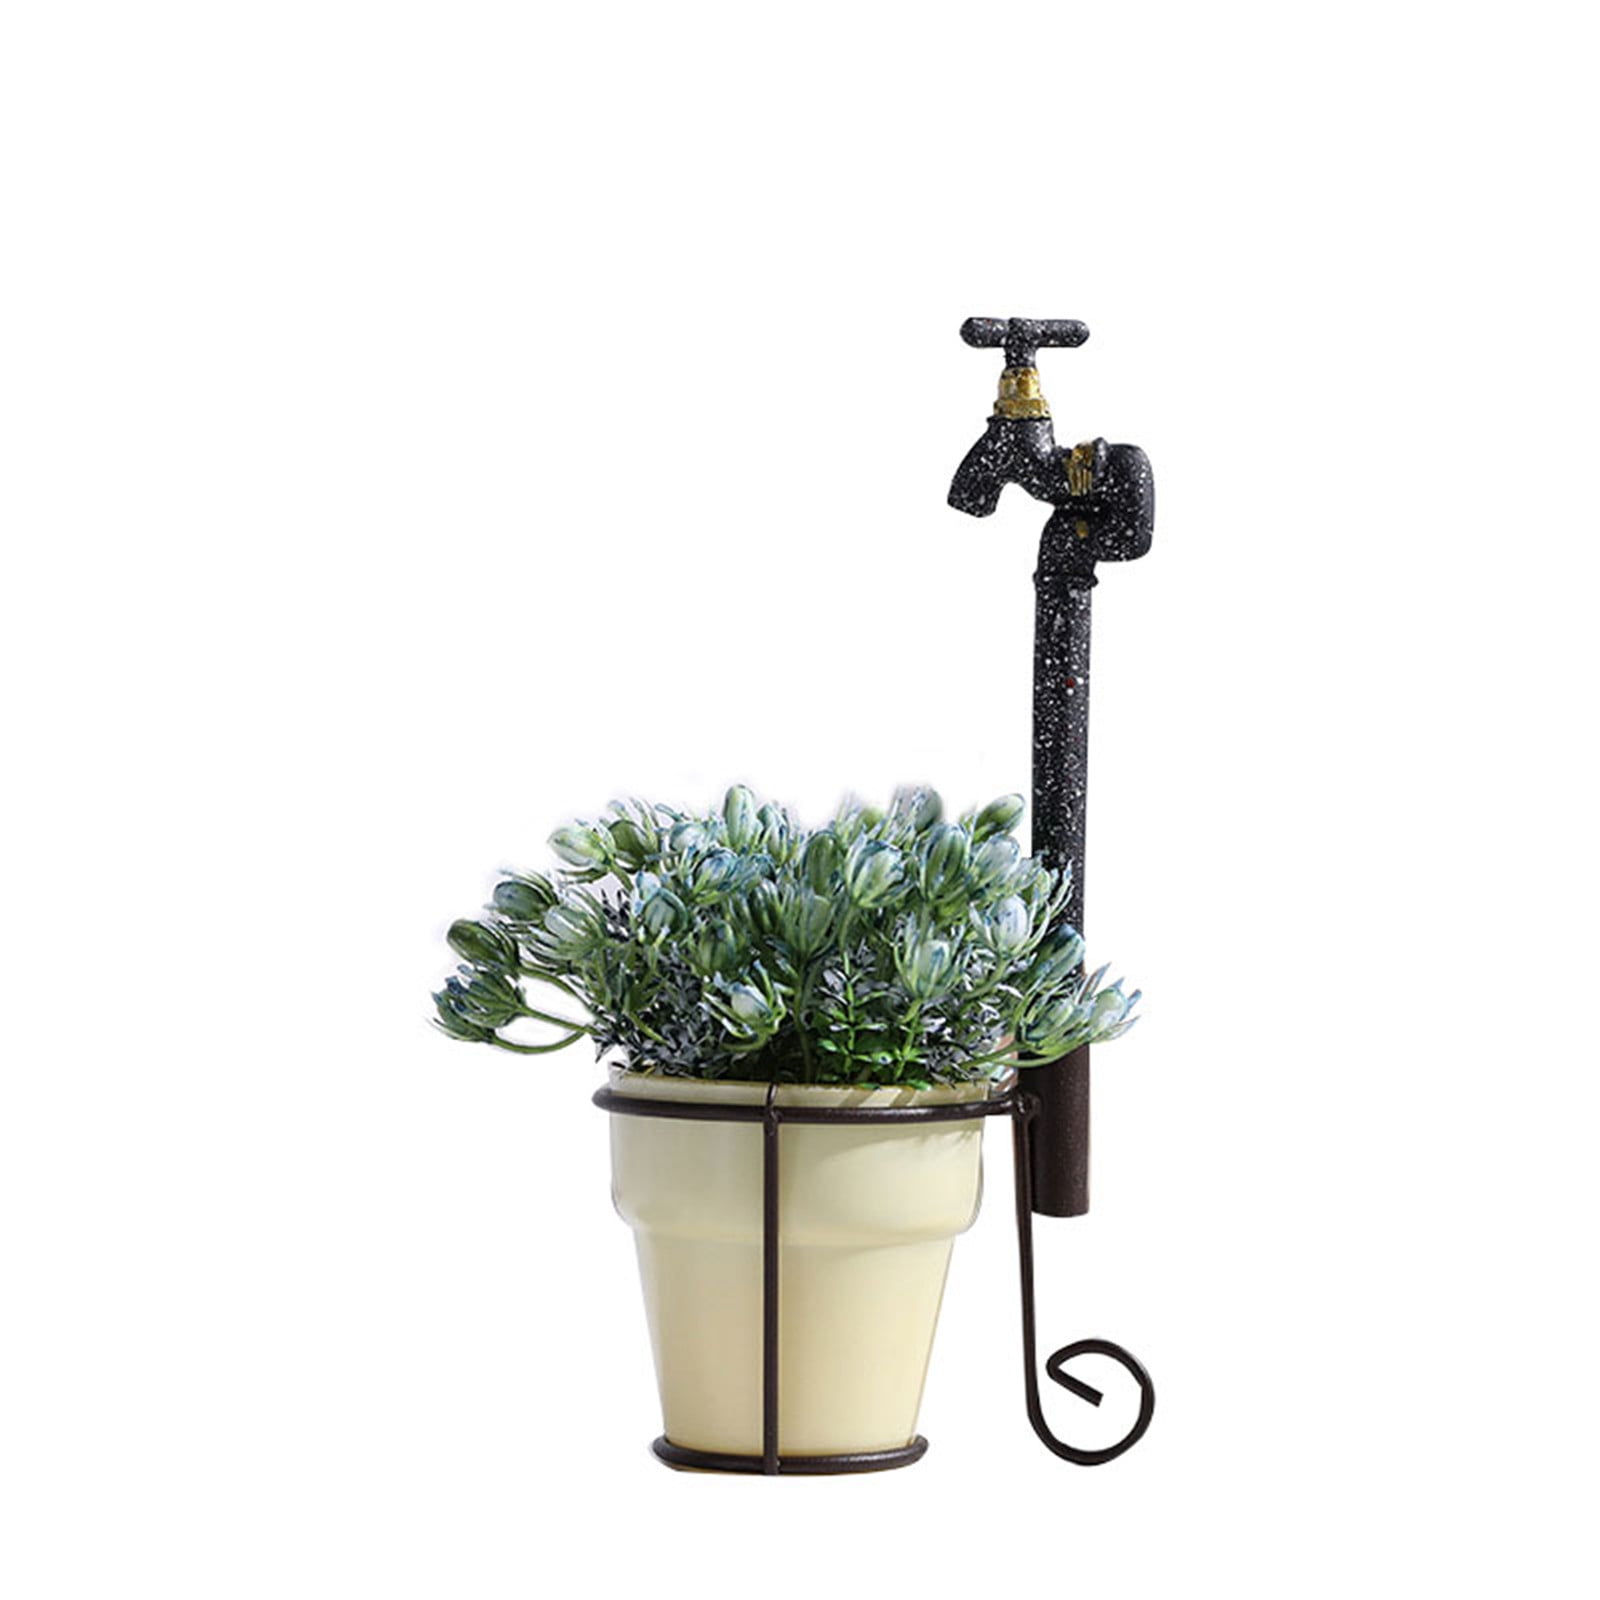 Rustic Faucet & Spigot Knob Metal Gray 2 Bucket Garden Flower Pot Planter Stake 